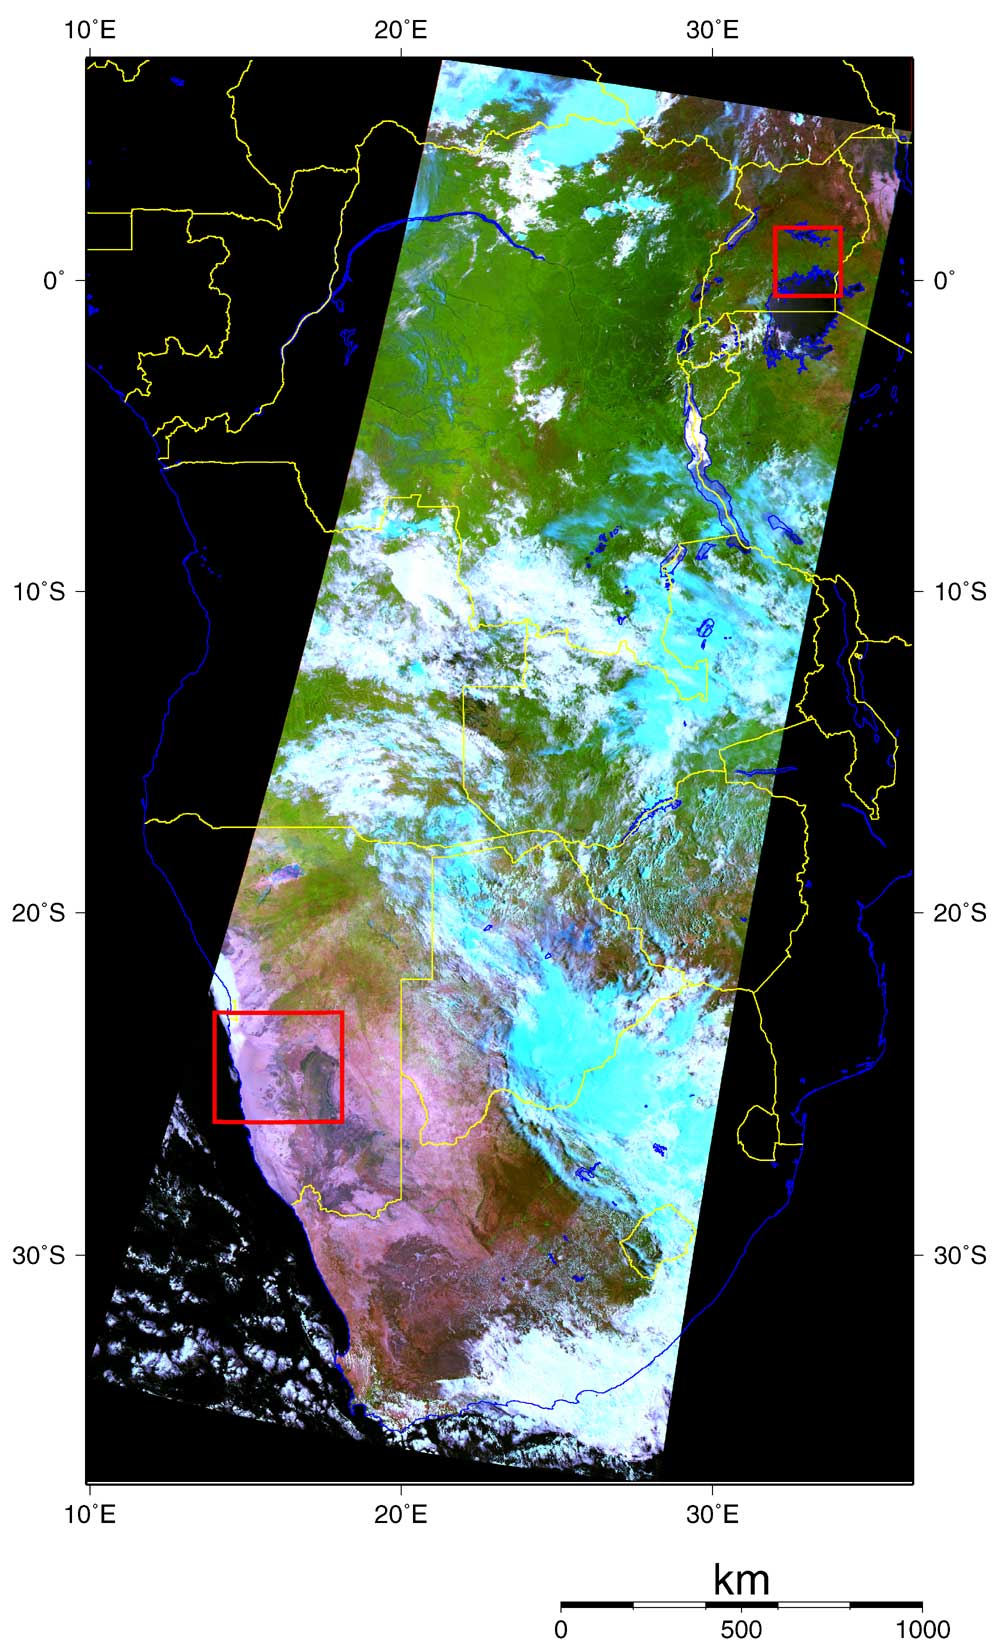 Image from orbit across Africa